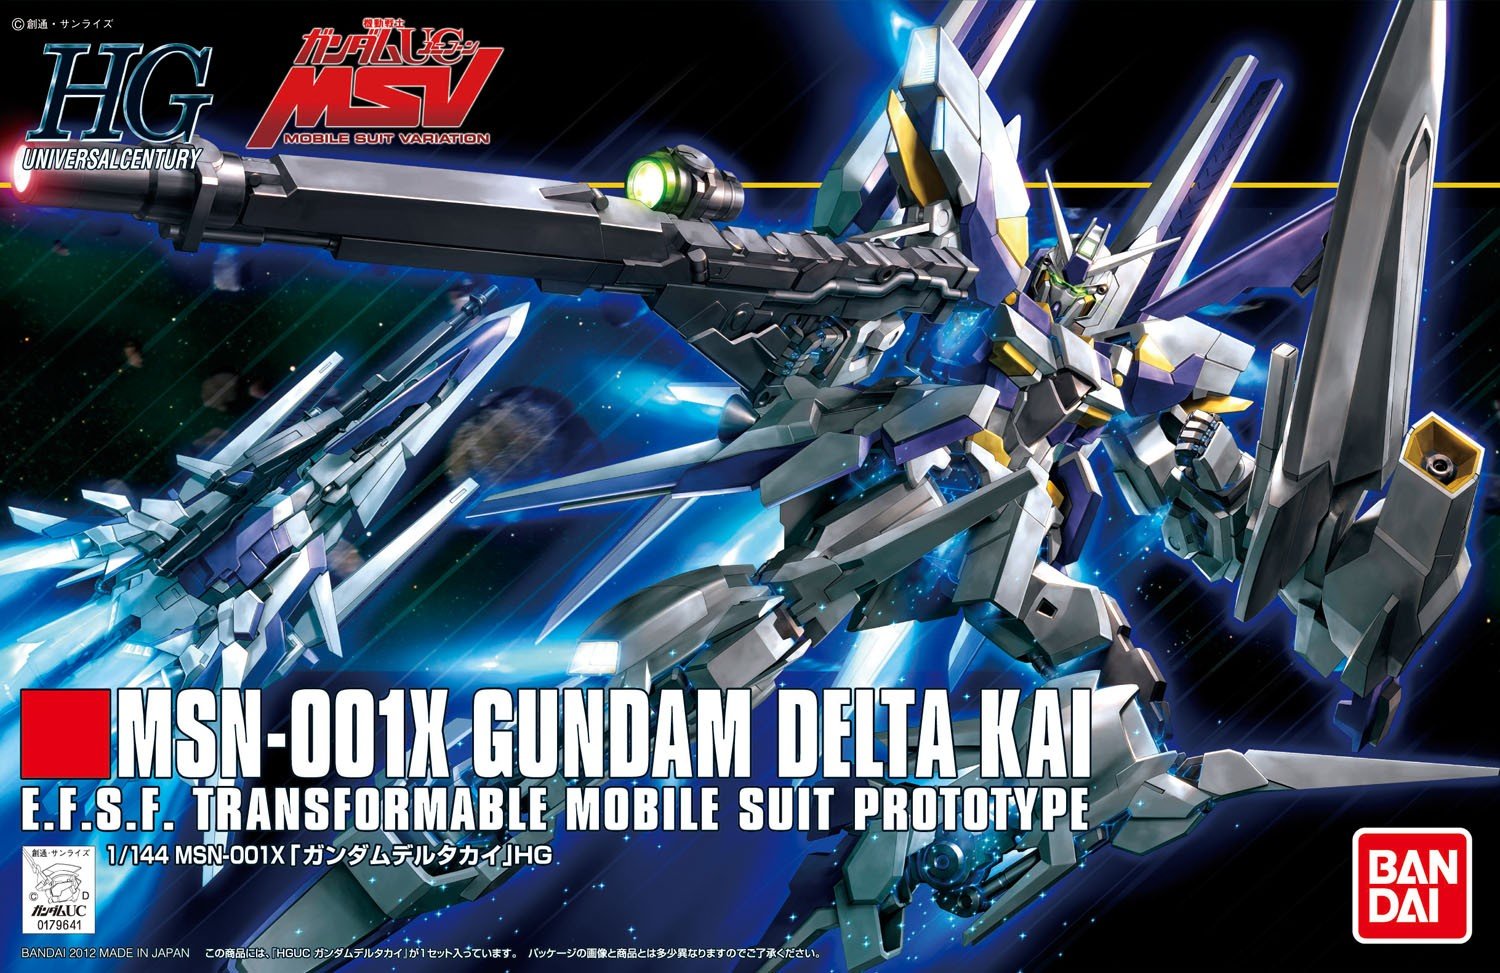 Hguc Msn 001x Gundam Delta Kai Update Wallpaper Size Image